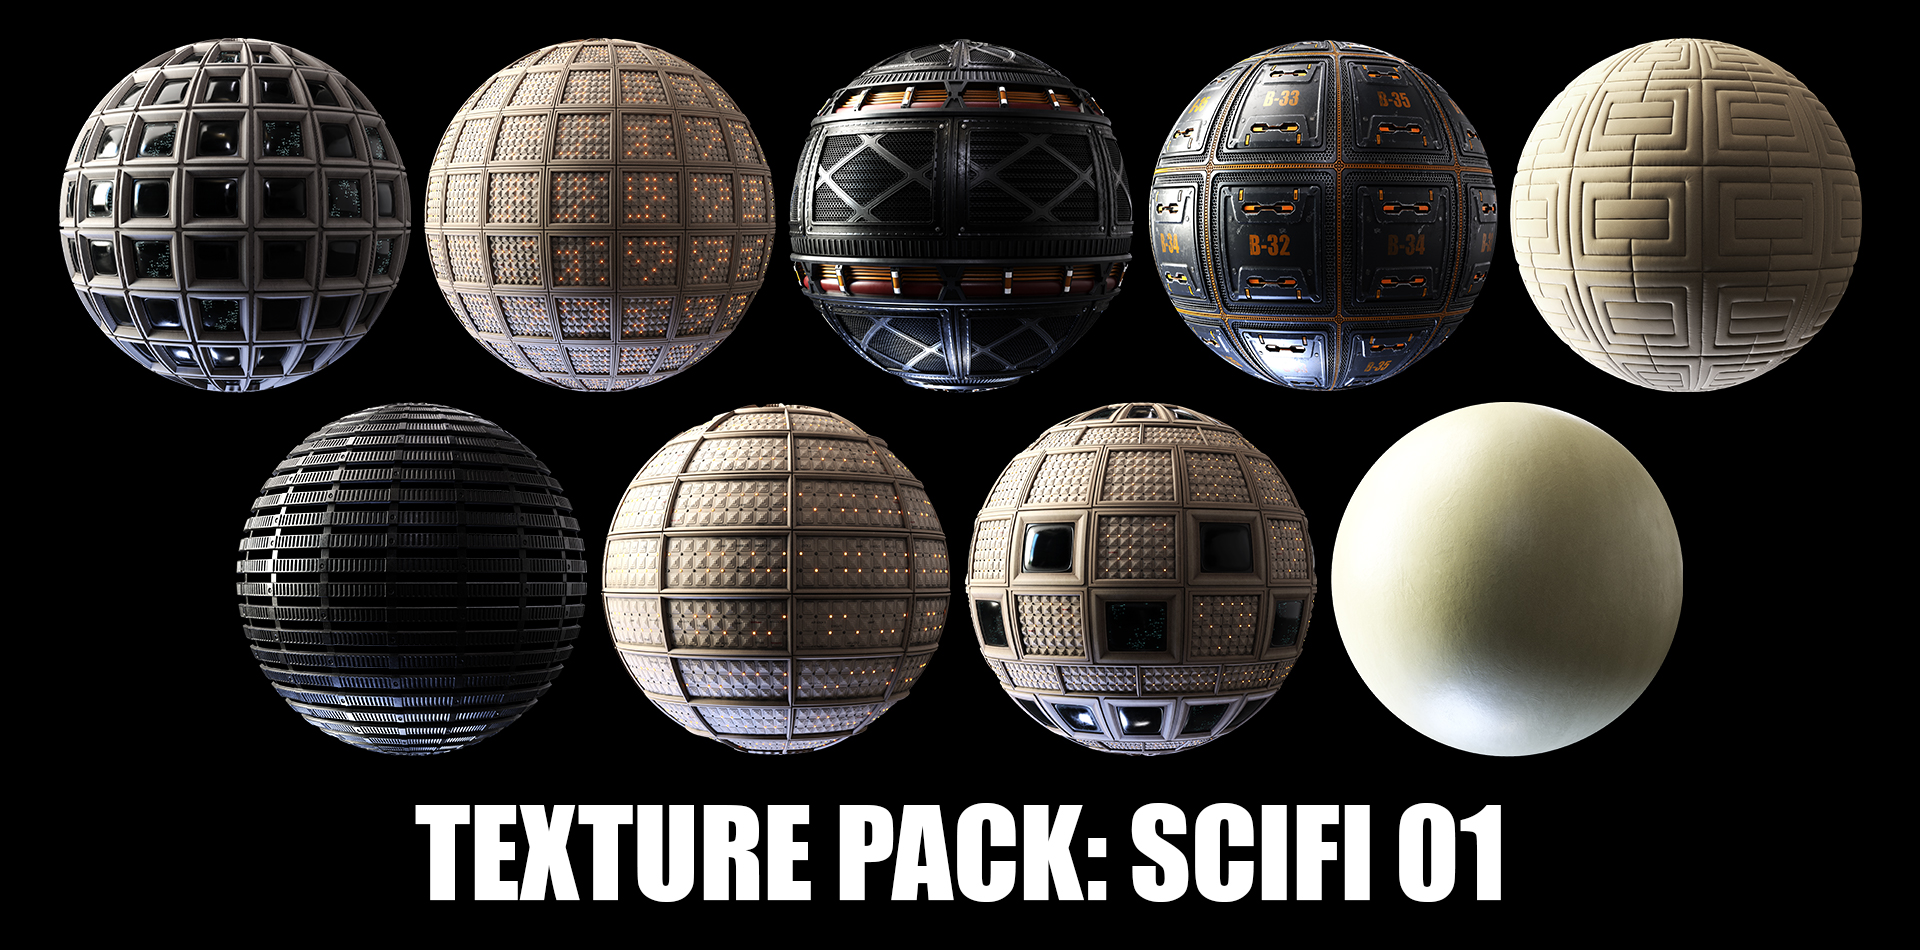 Texture Pack: Scifi 01